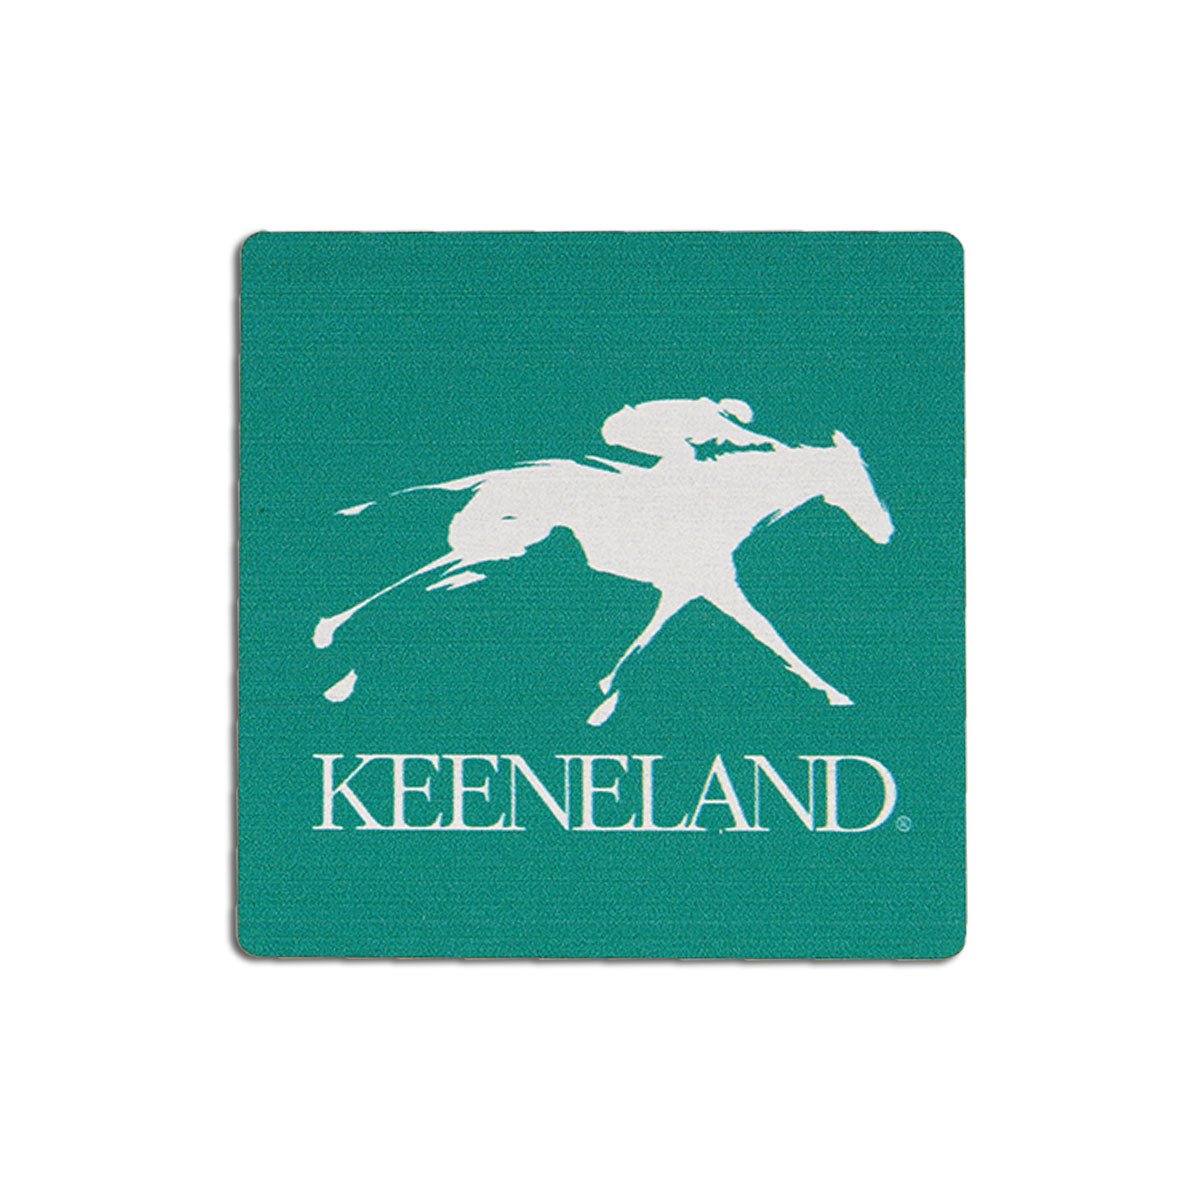 Keeneland Square Wooden Magnet